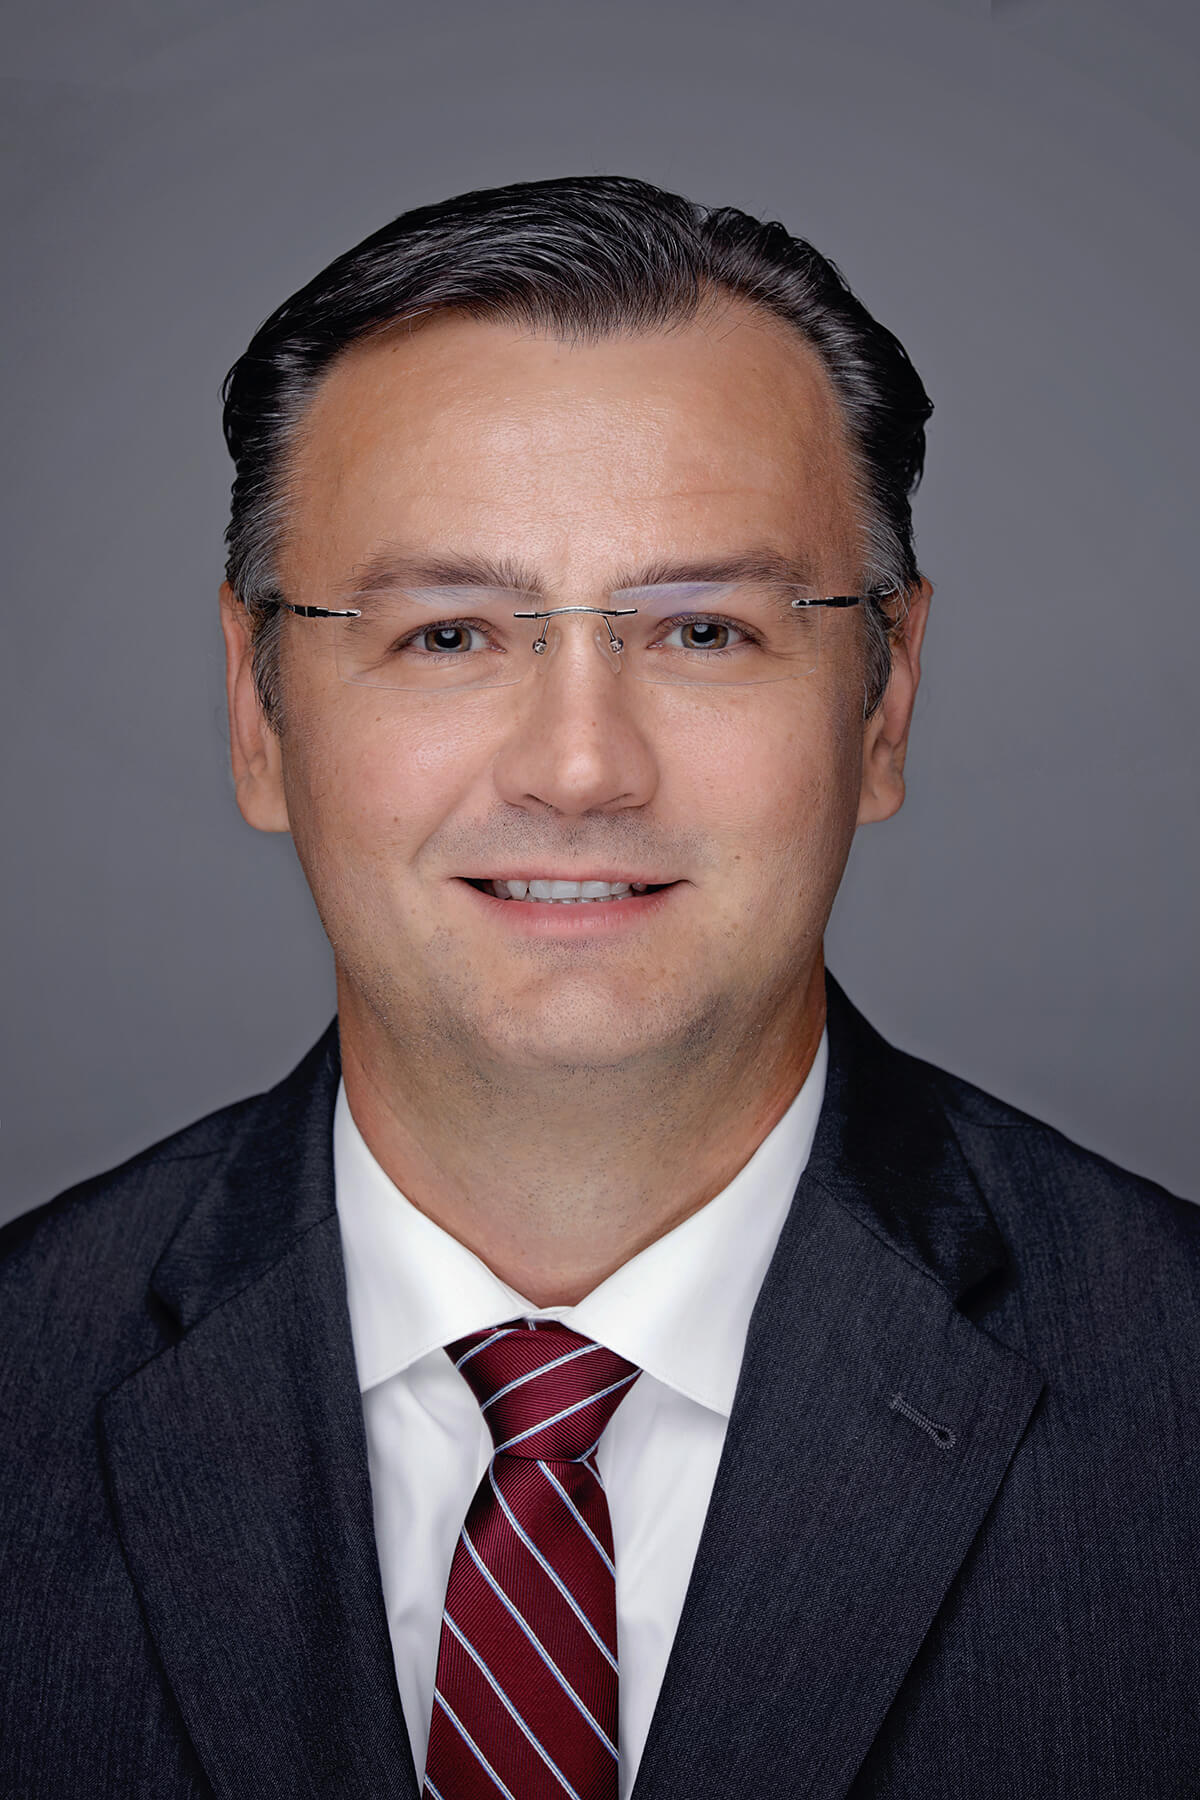 Robert Palussek, EVP of Operations